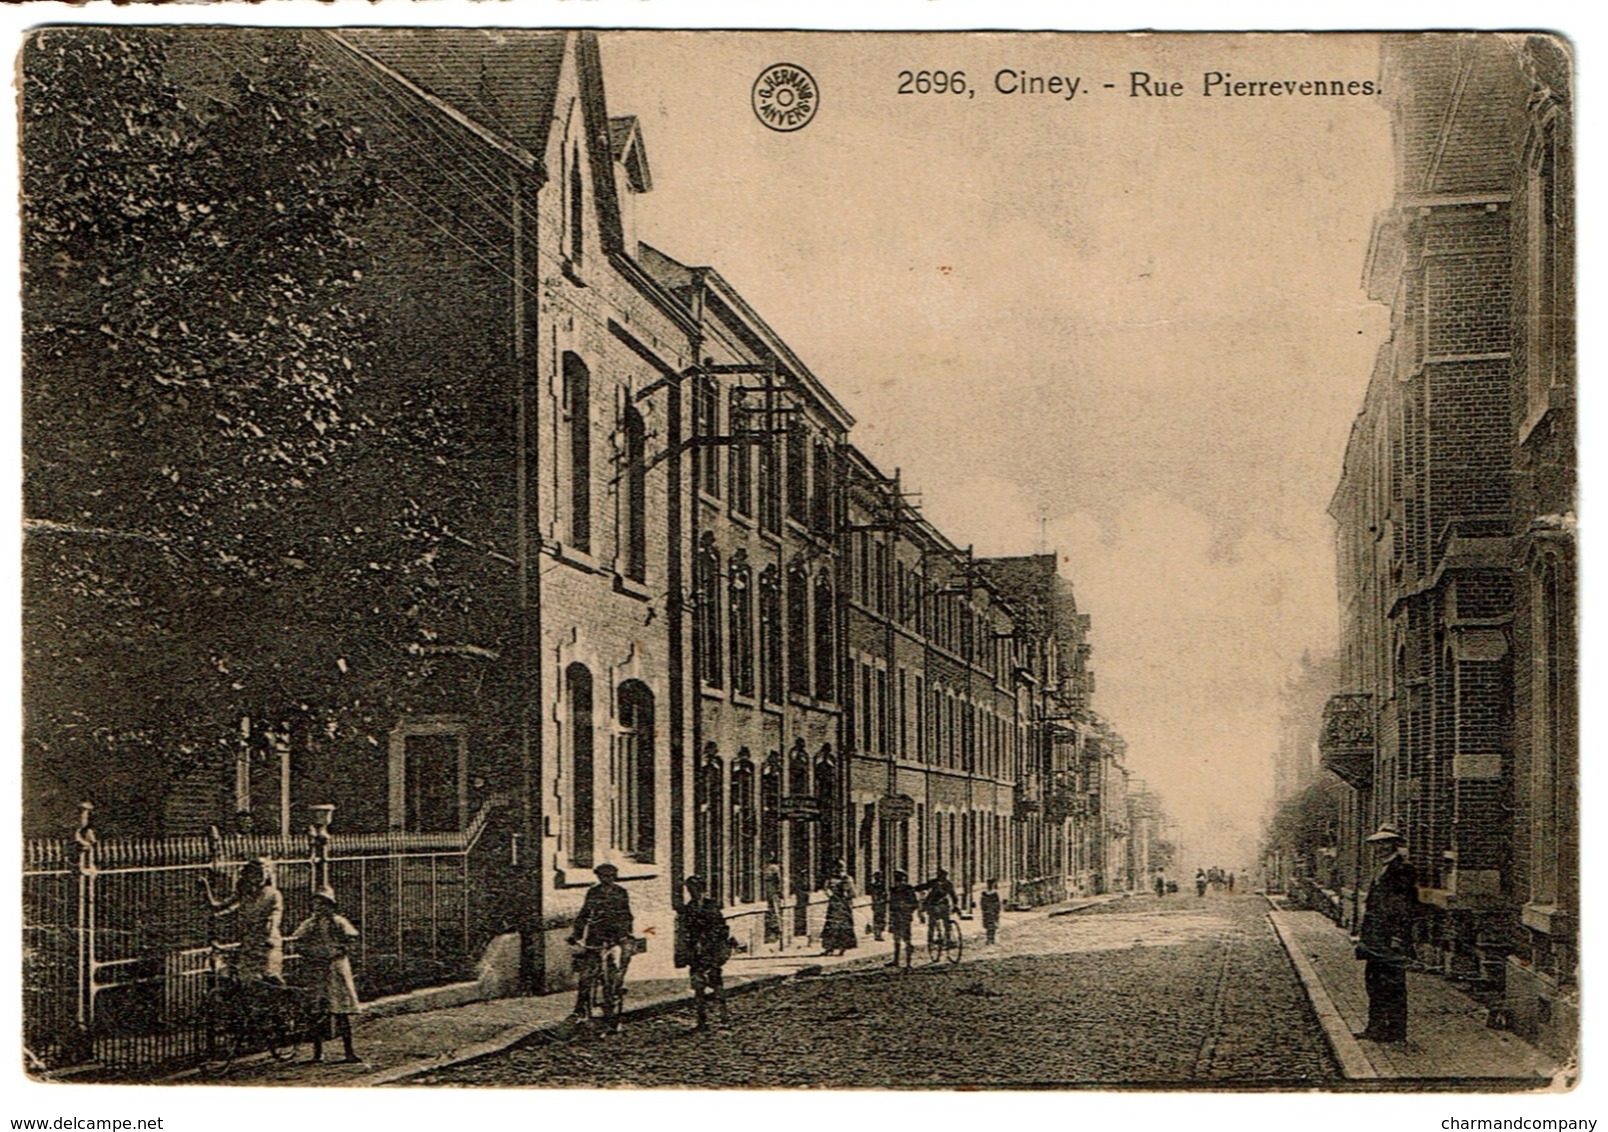 Ciney - Rue Pierrevennes - Edit. G. Hermans N° 2696 - Circulée 1925 - 2 Scans - Ciney